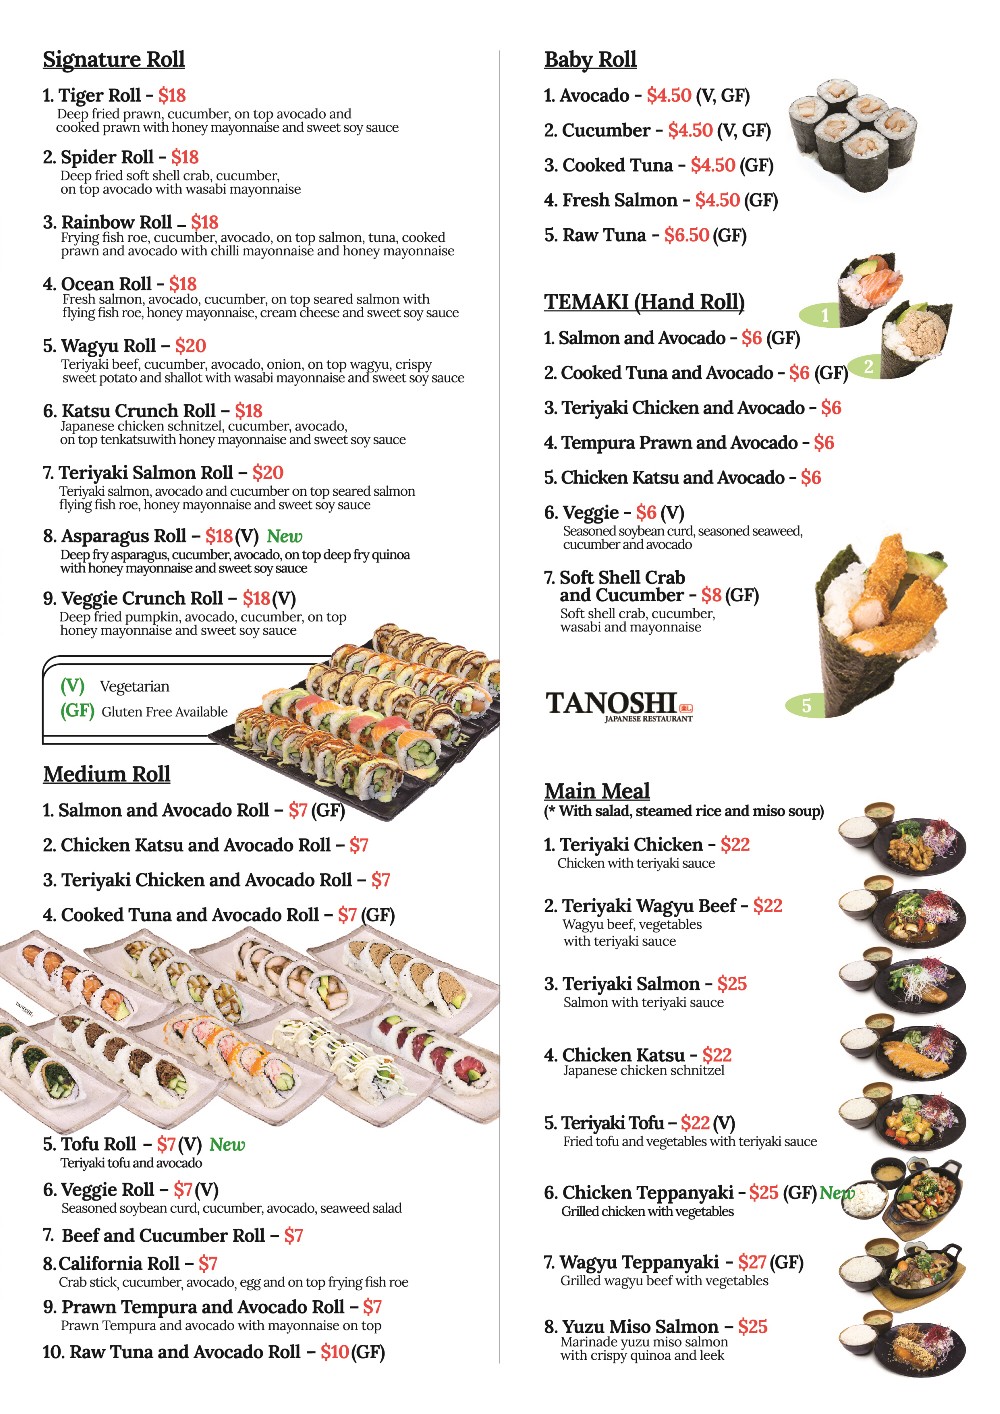 Order Tanoshi Sushi & American food Menu Delivery【Menu & Prices】, Miami